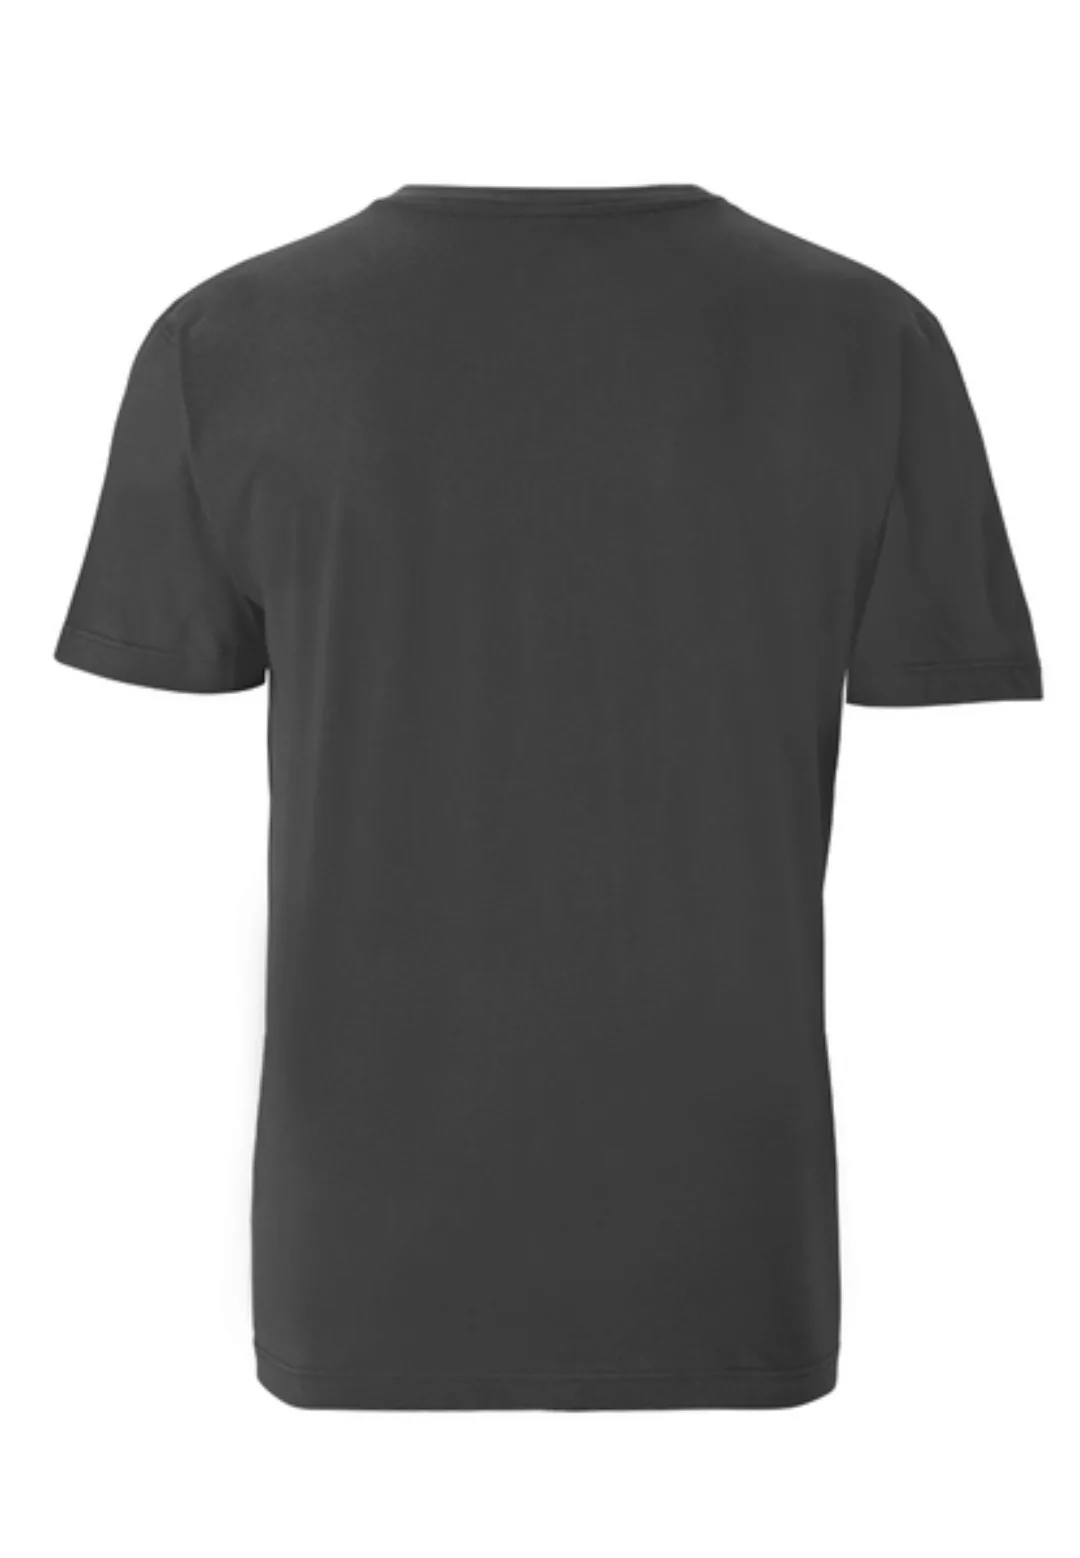 Logoshirt - Dc - Superman - Earth Hero - 100% Organic Cotton - T-shirt günstig online kaufen